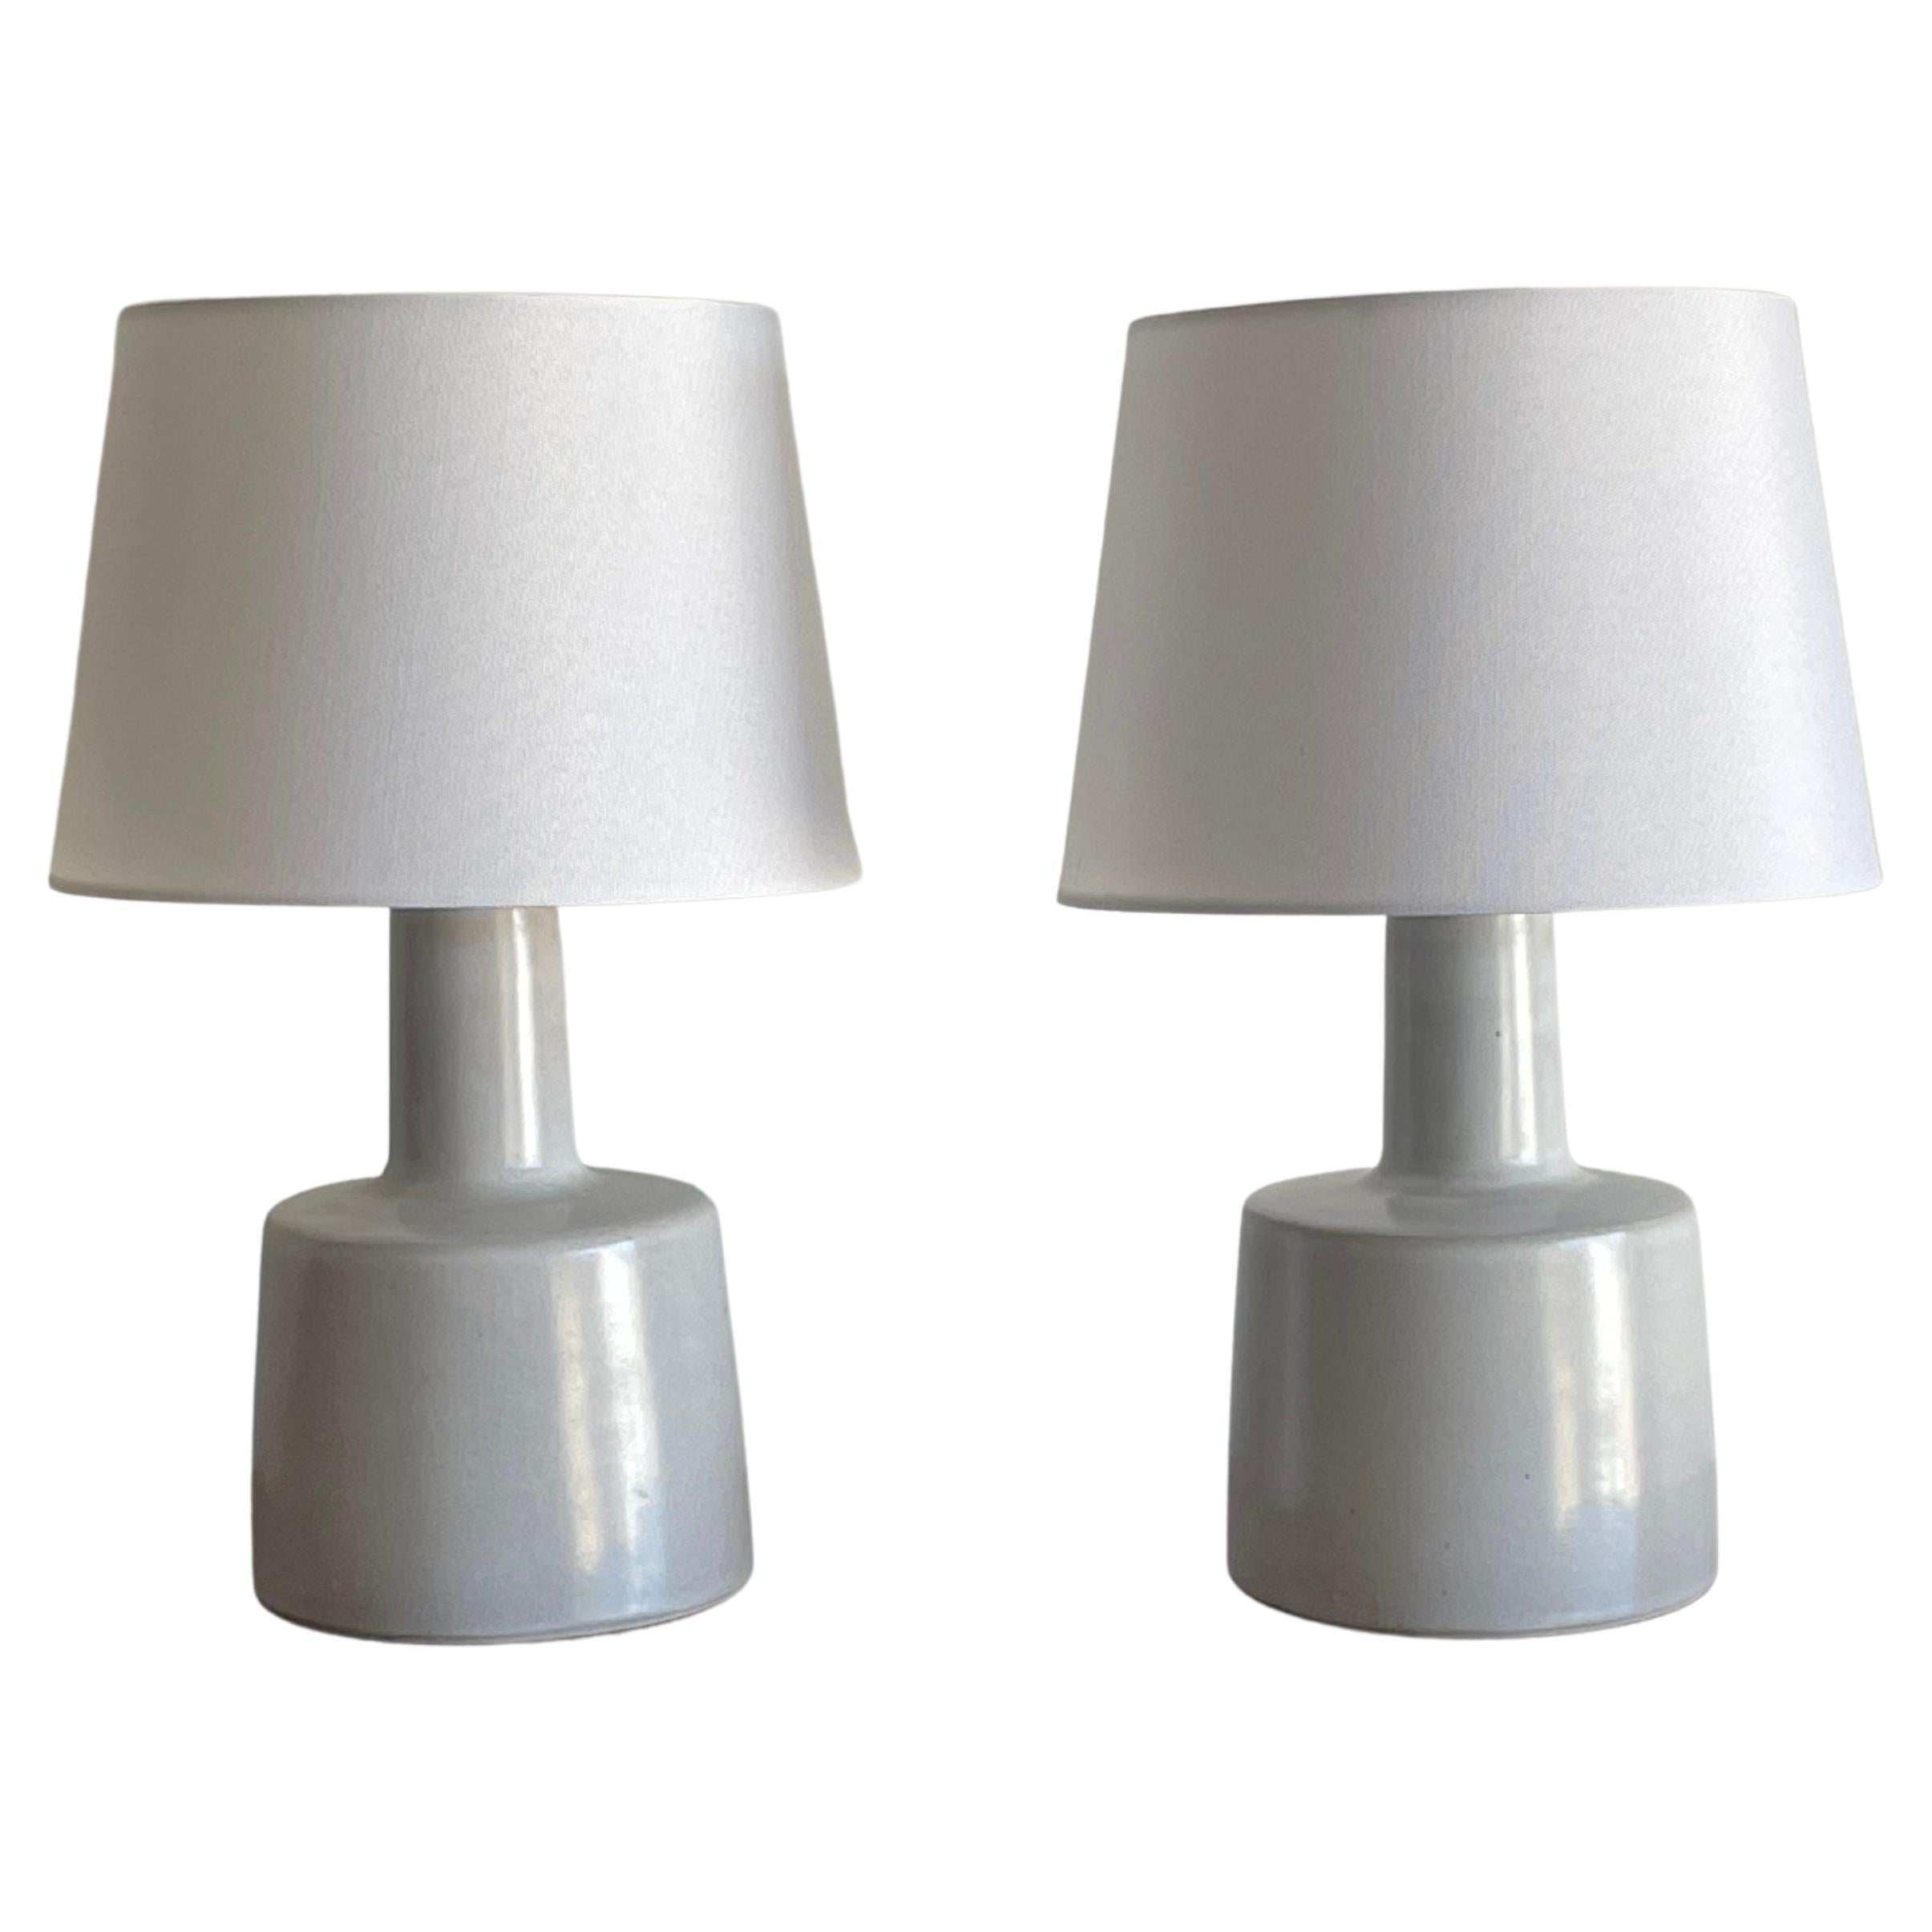 Jane and Gordon Martz Table Lamps, Ceramic